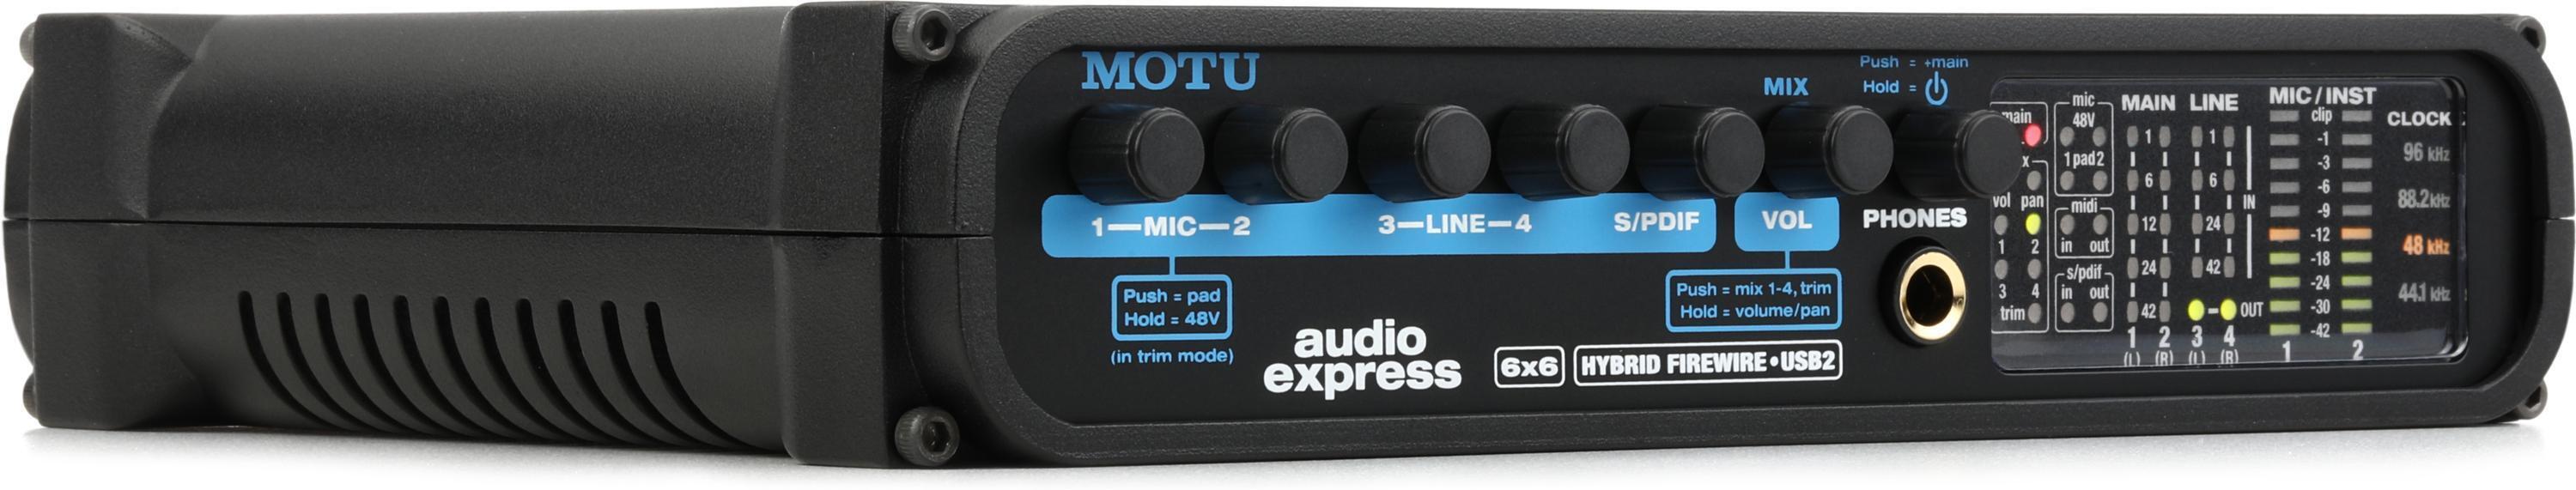 MOTU Audio Express USB / FireWire Audio Interface | Sweetwater